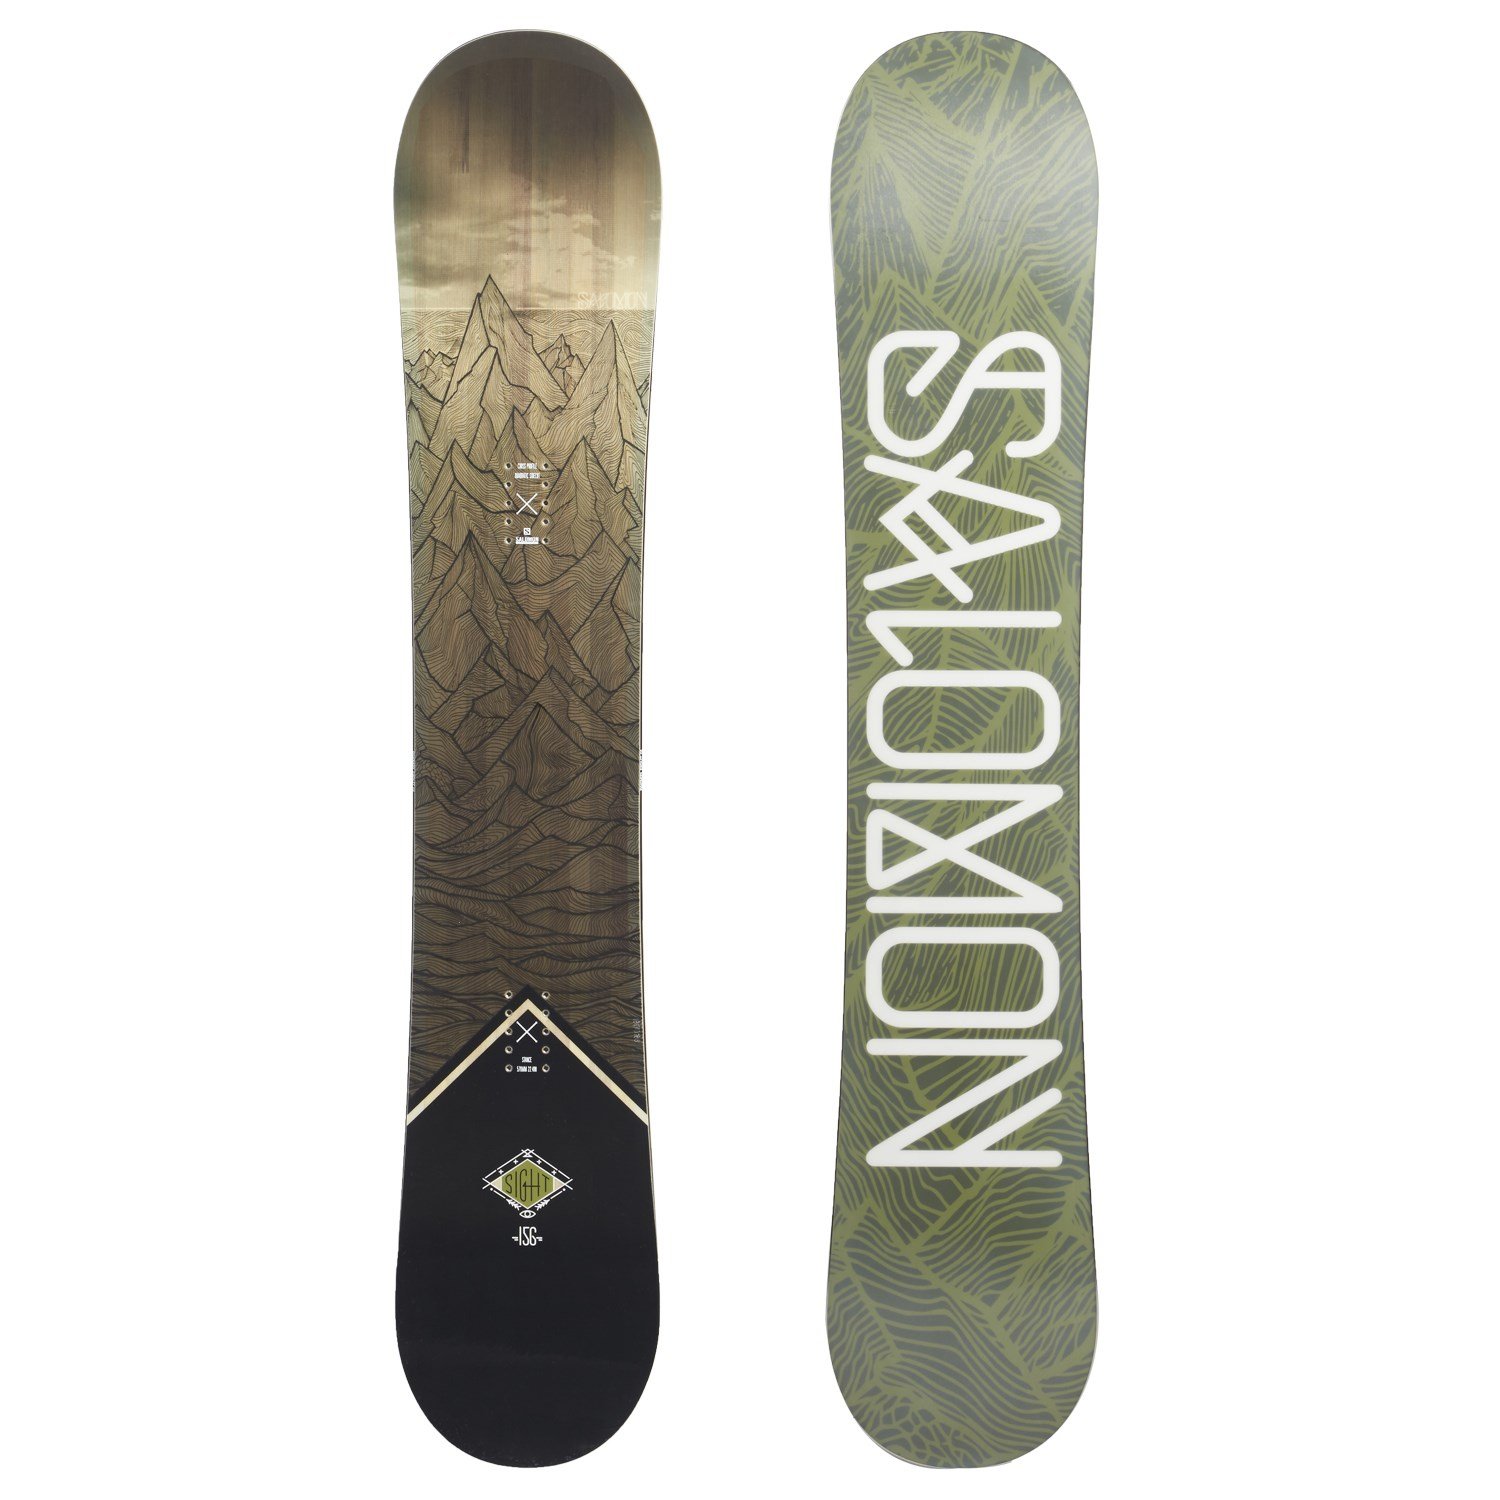 salomon sight wide snowboard